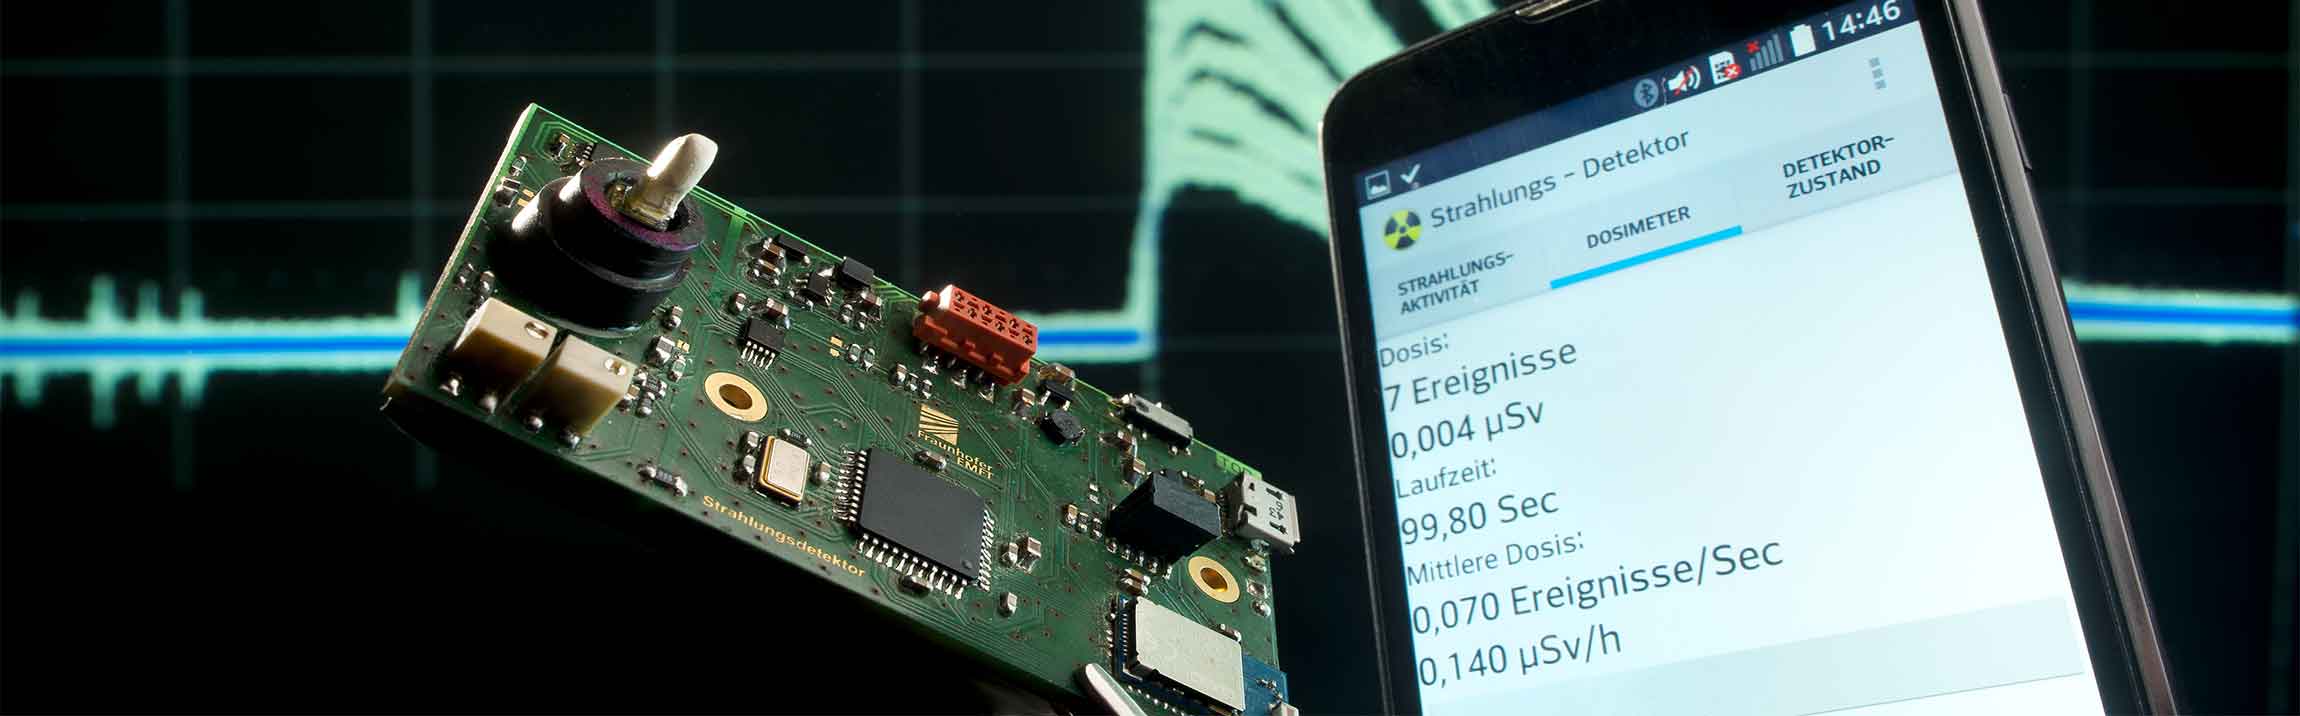 IoT sensor node for detection of gamma radiation